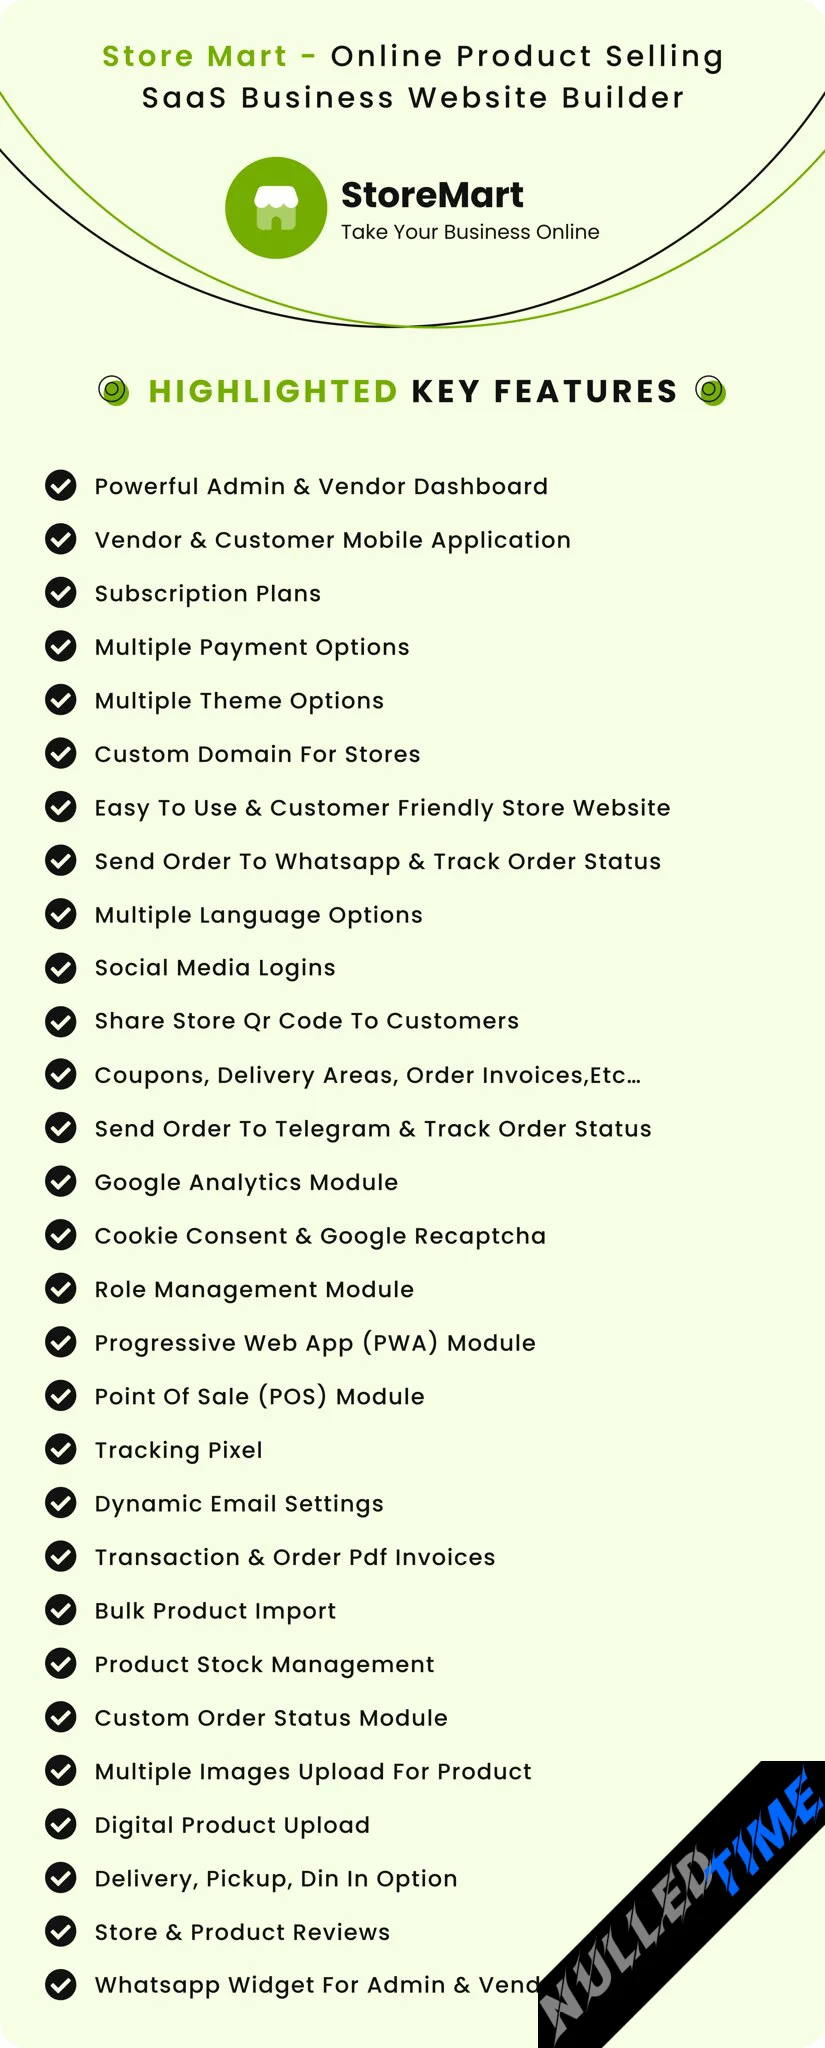 StoreMart SaaS  Online Product Selling Business Website Builder-2.webp